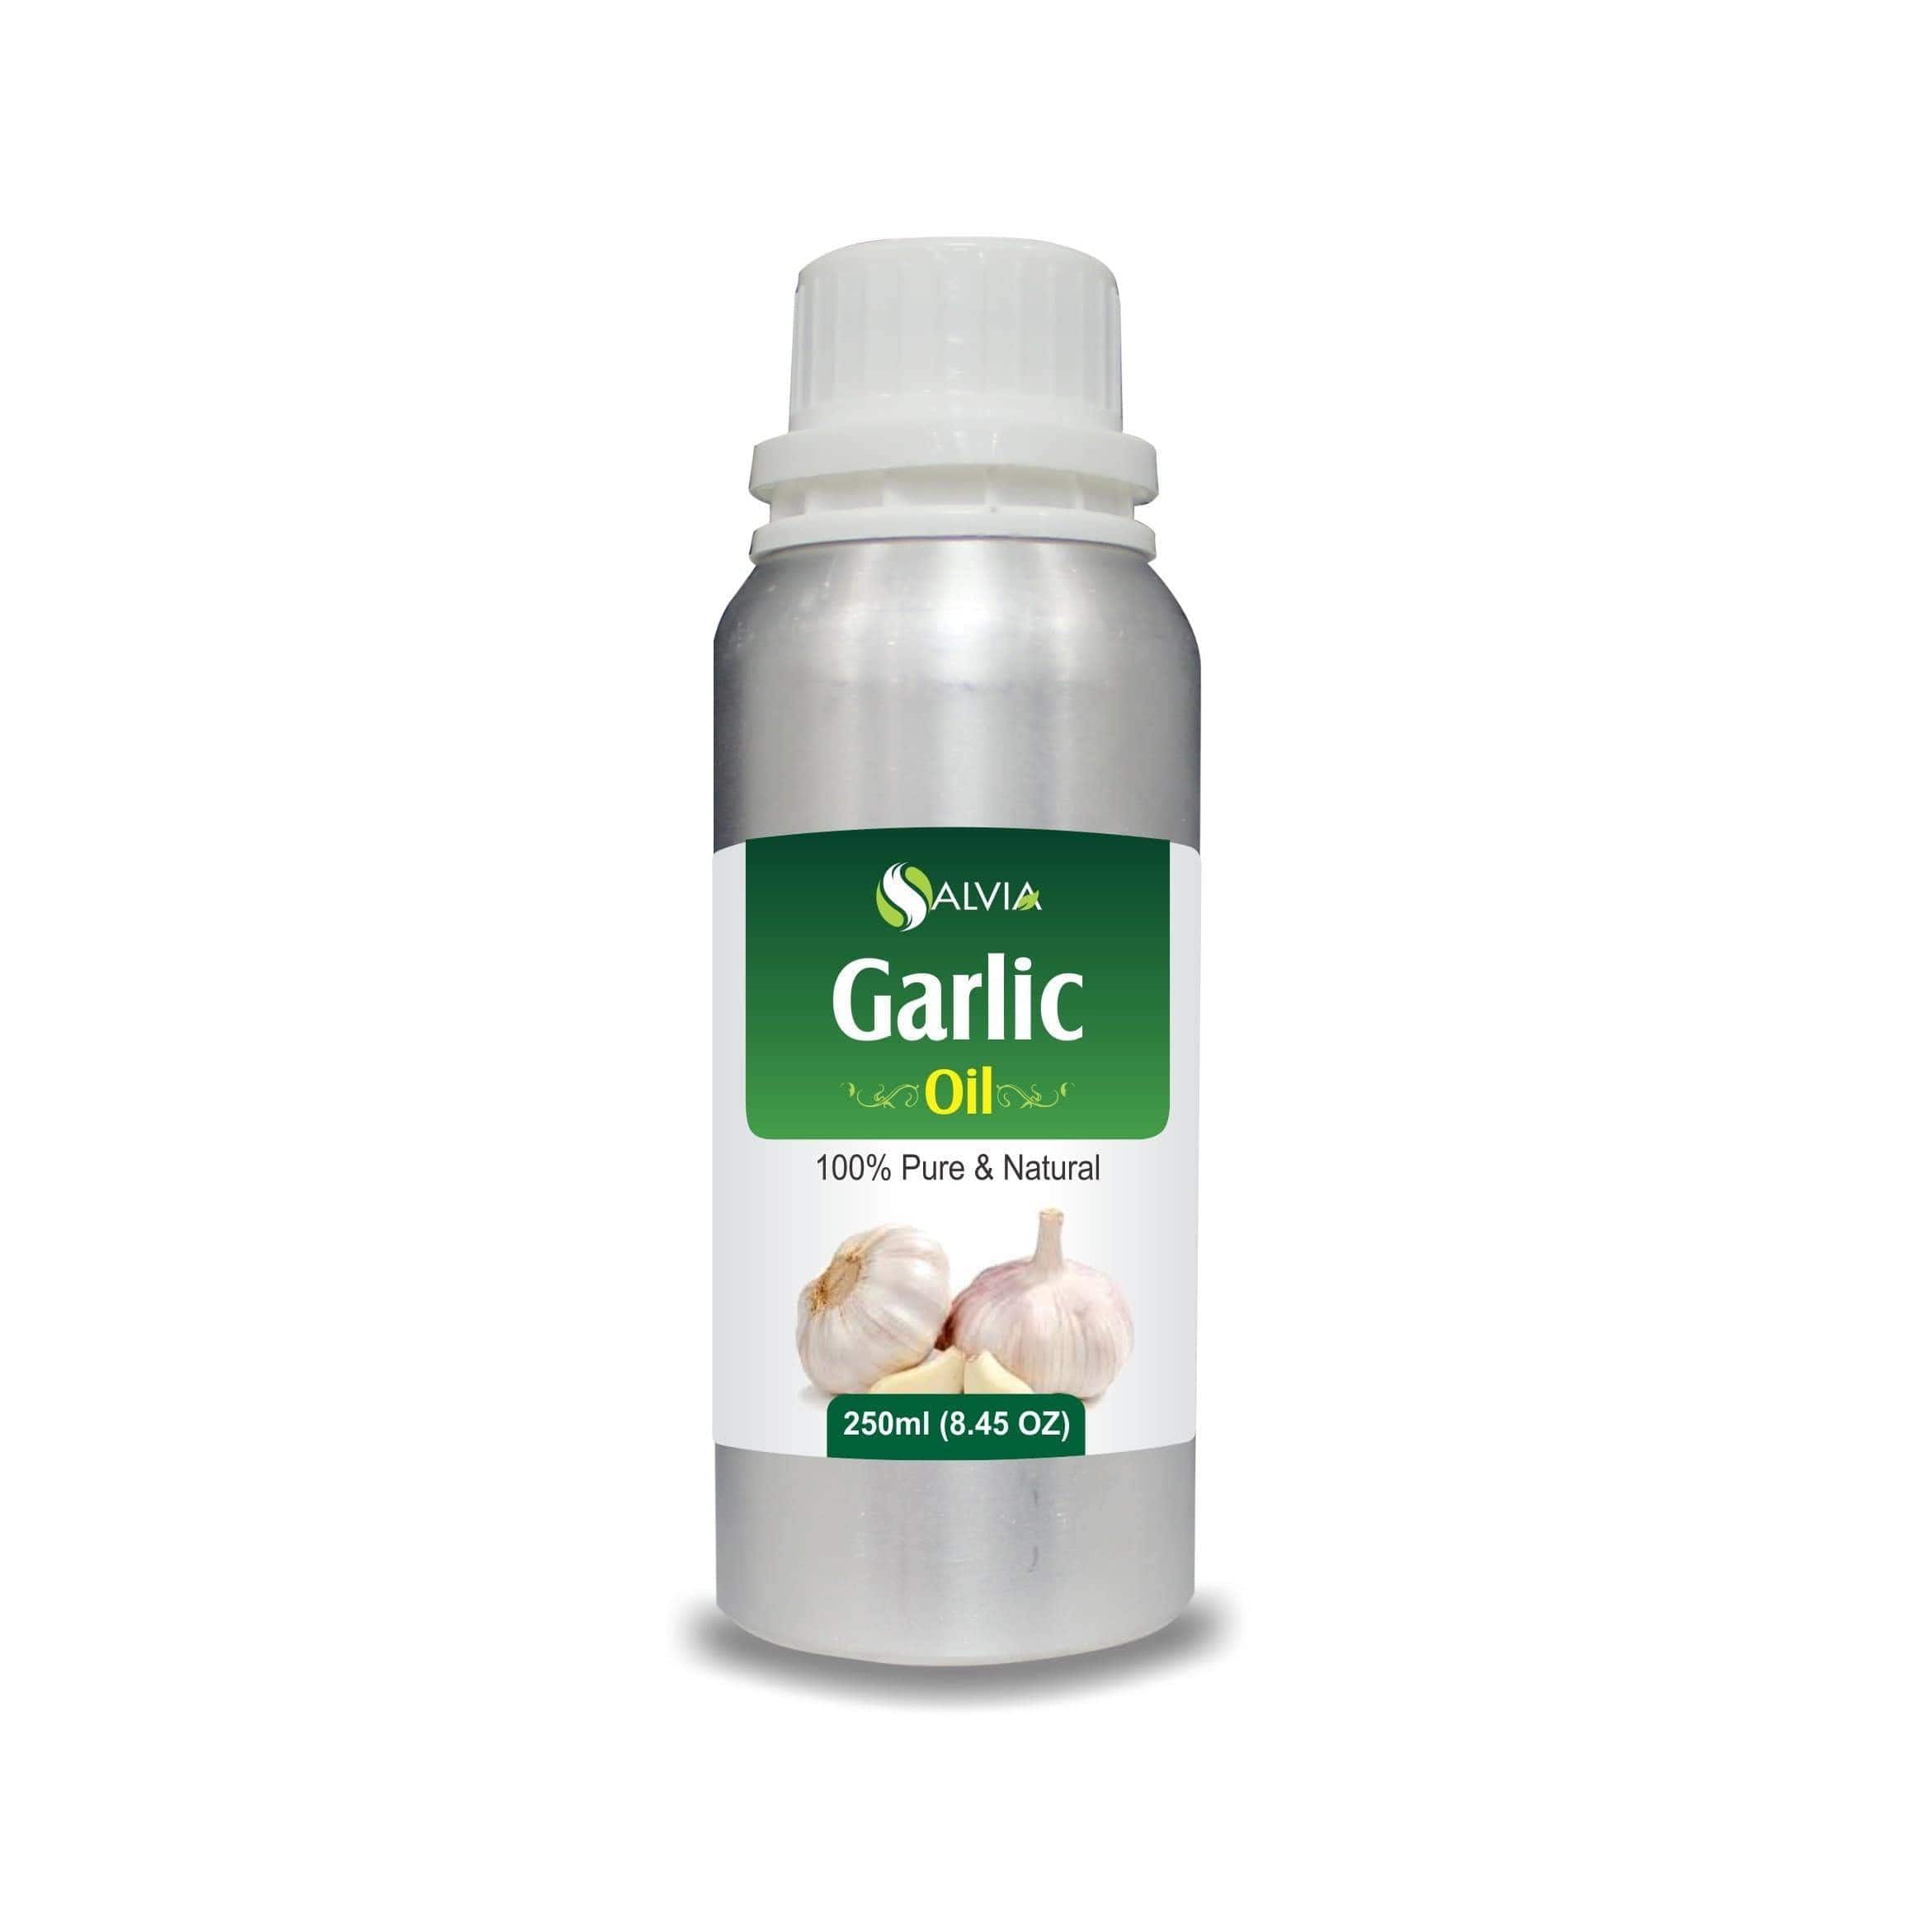 garlic oil for hair